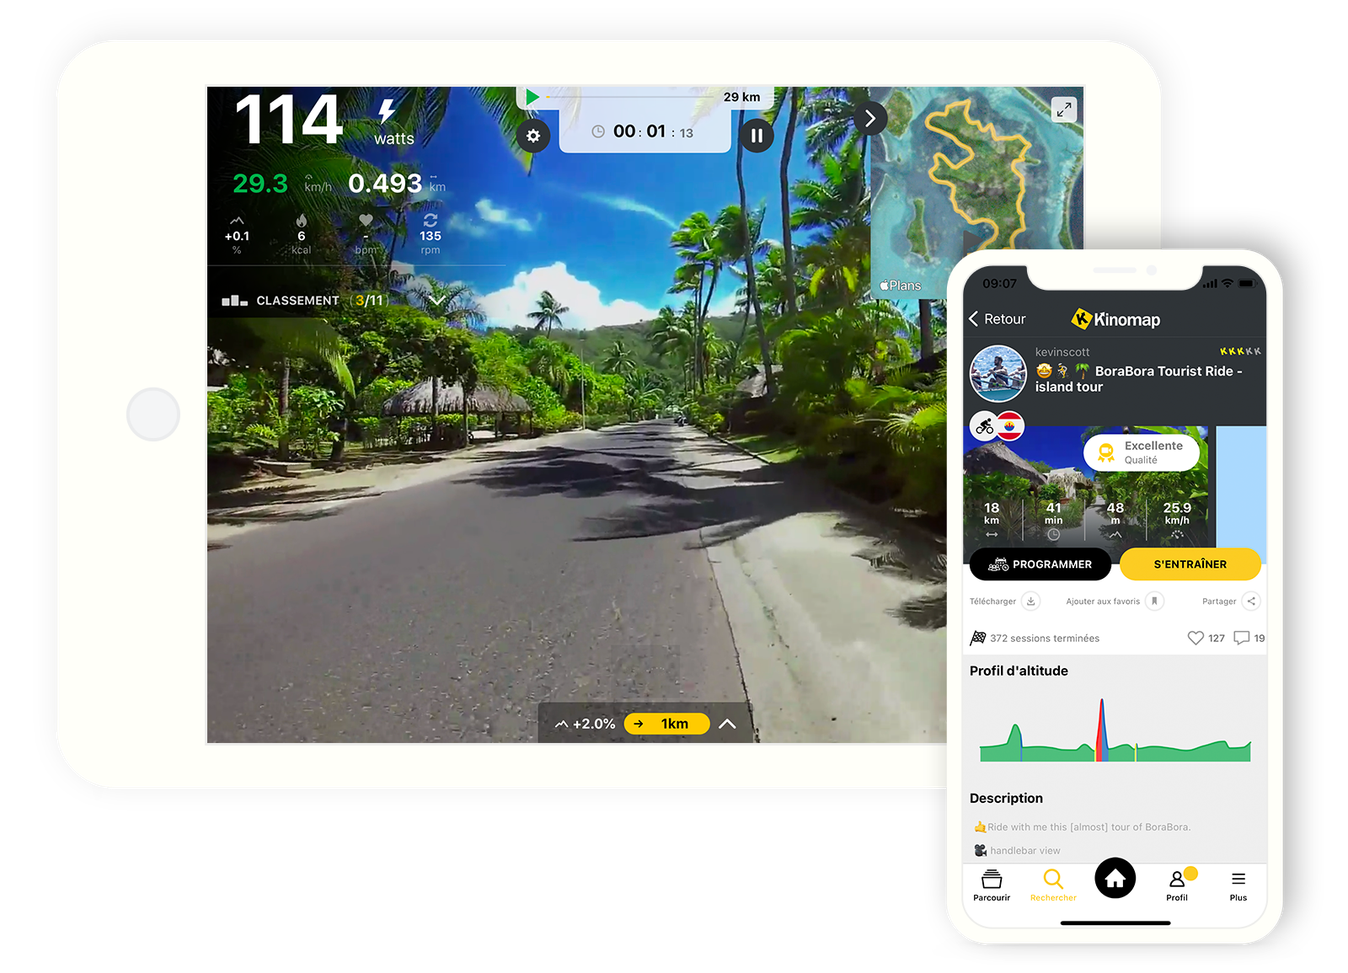 Kinomap is a virtual reality cycling platform